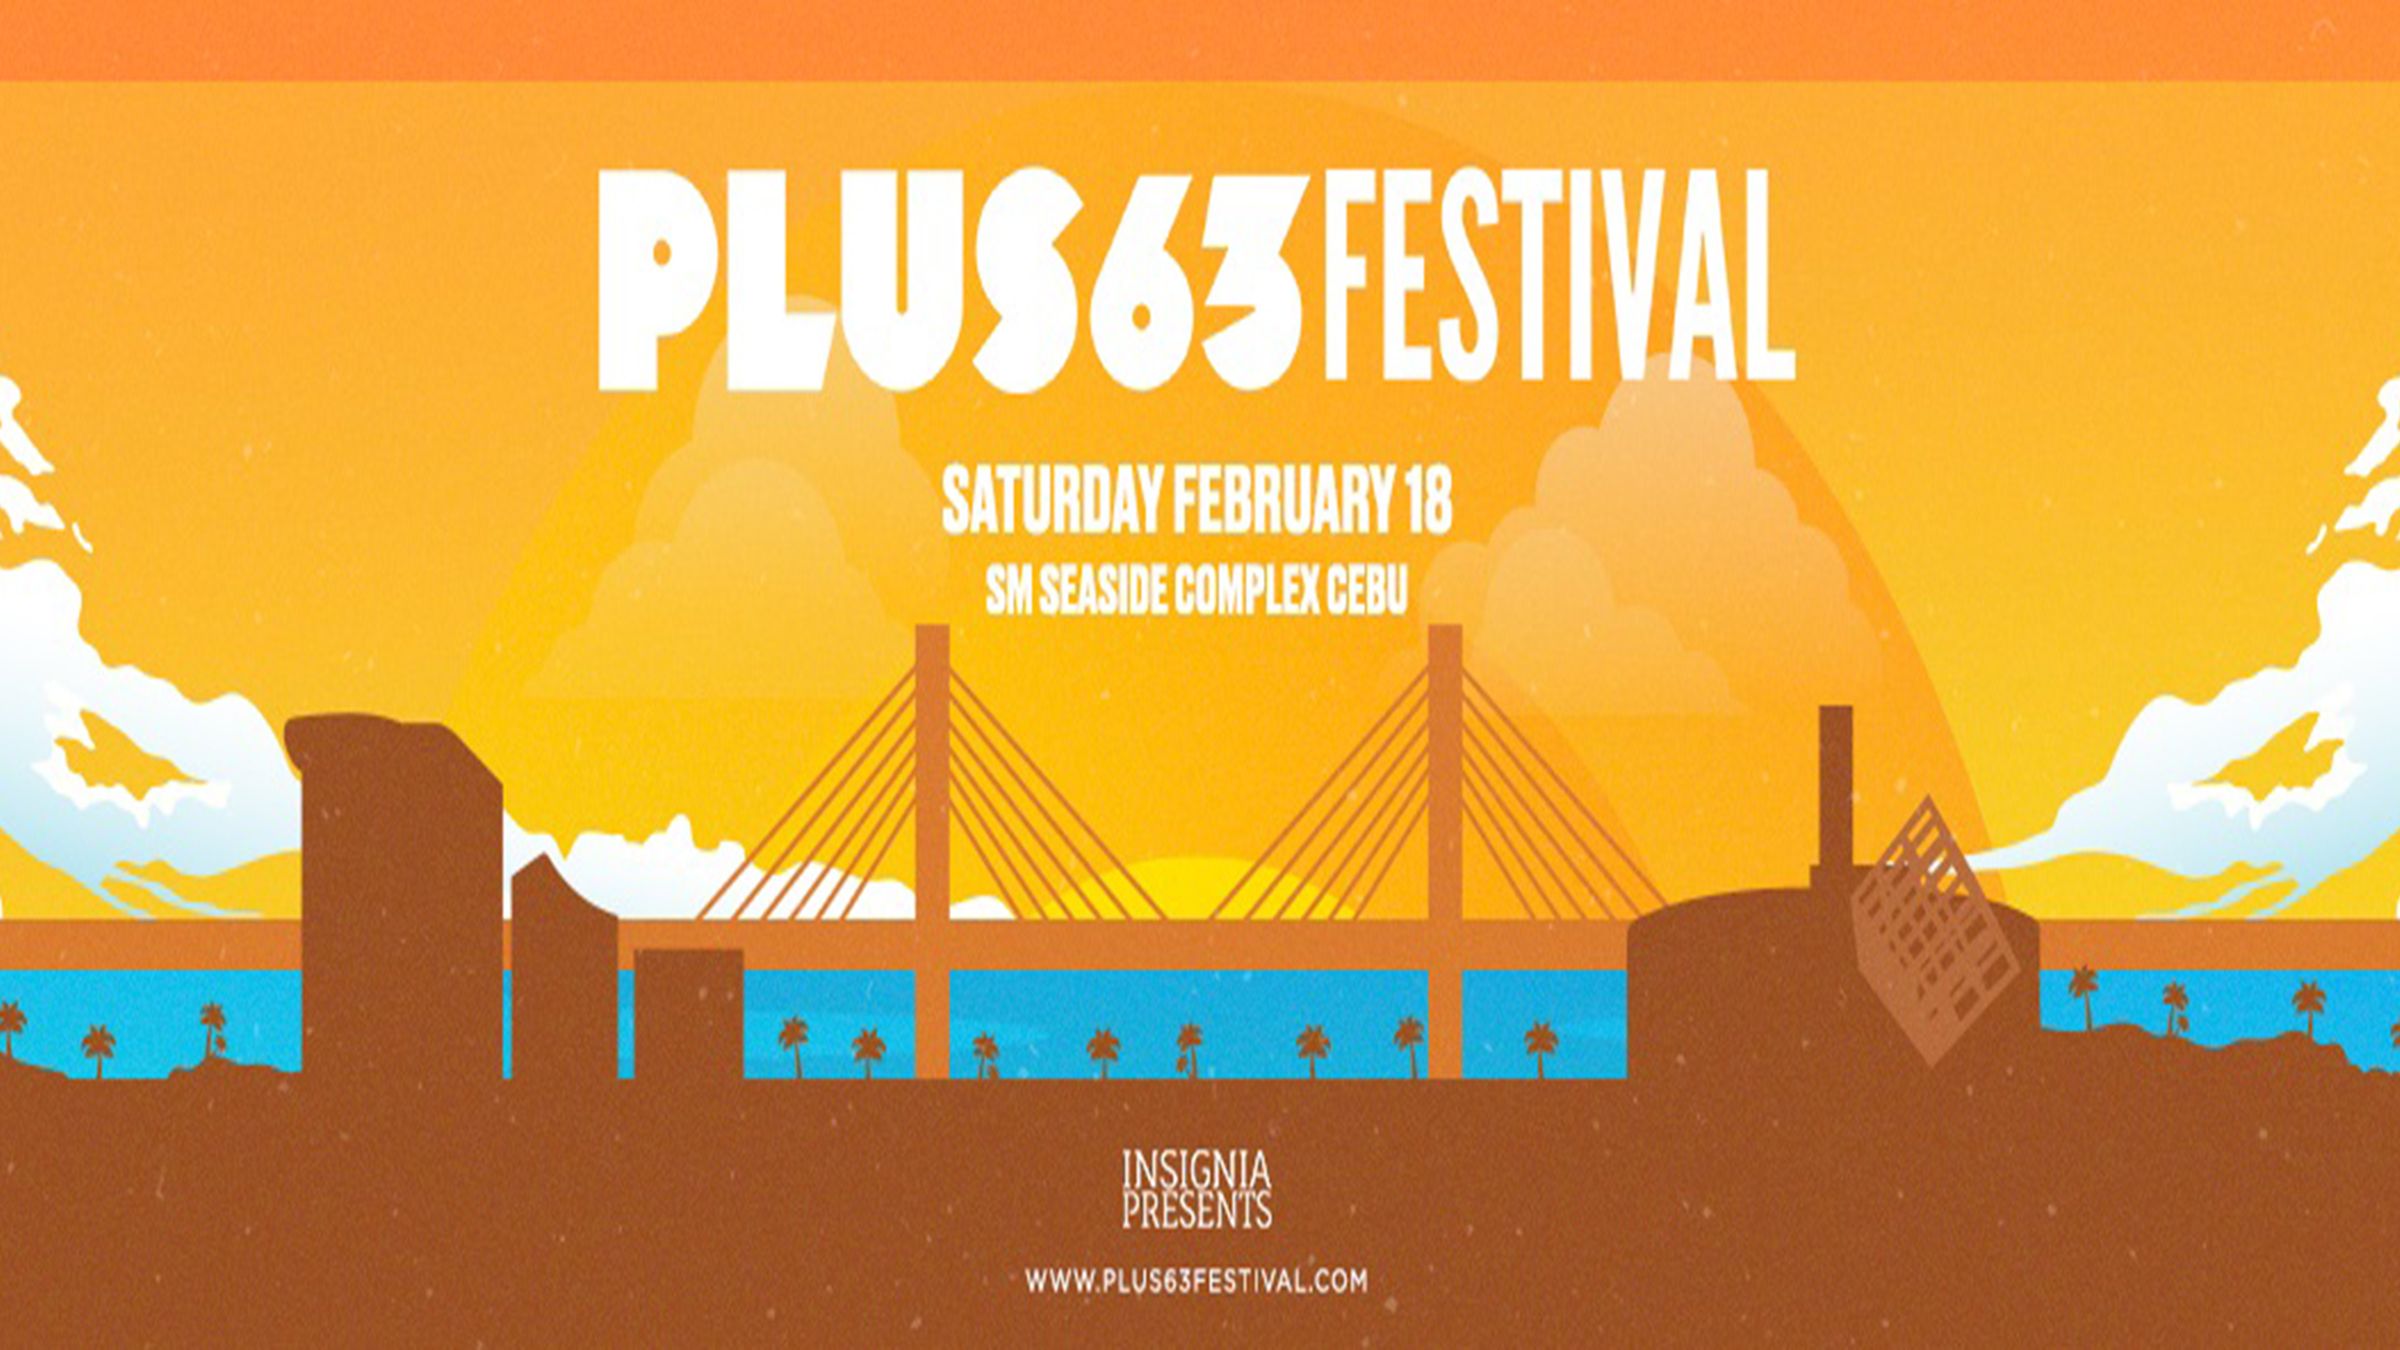 Cebu music festival, PLUS63, makes a comeback